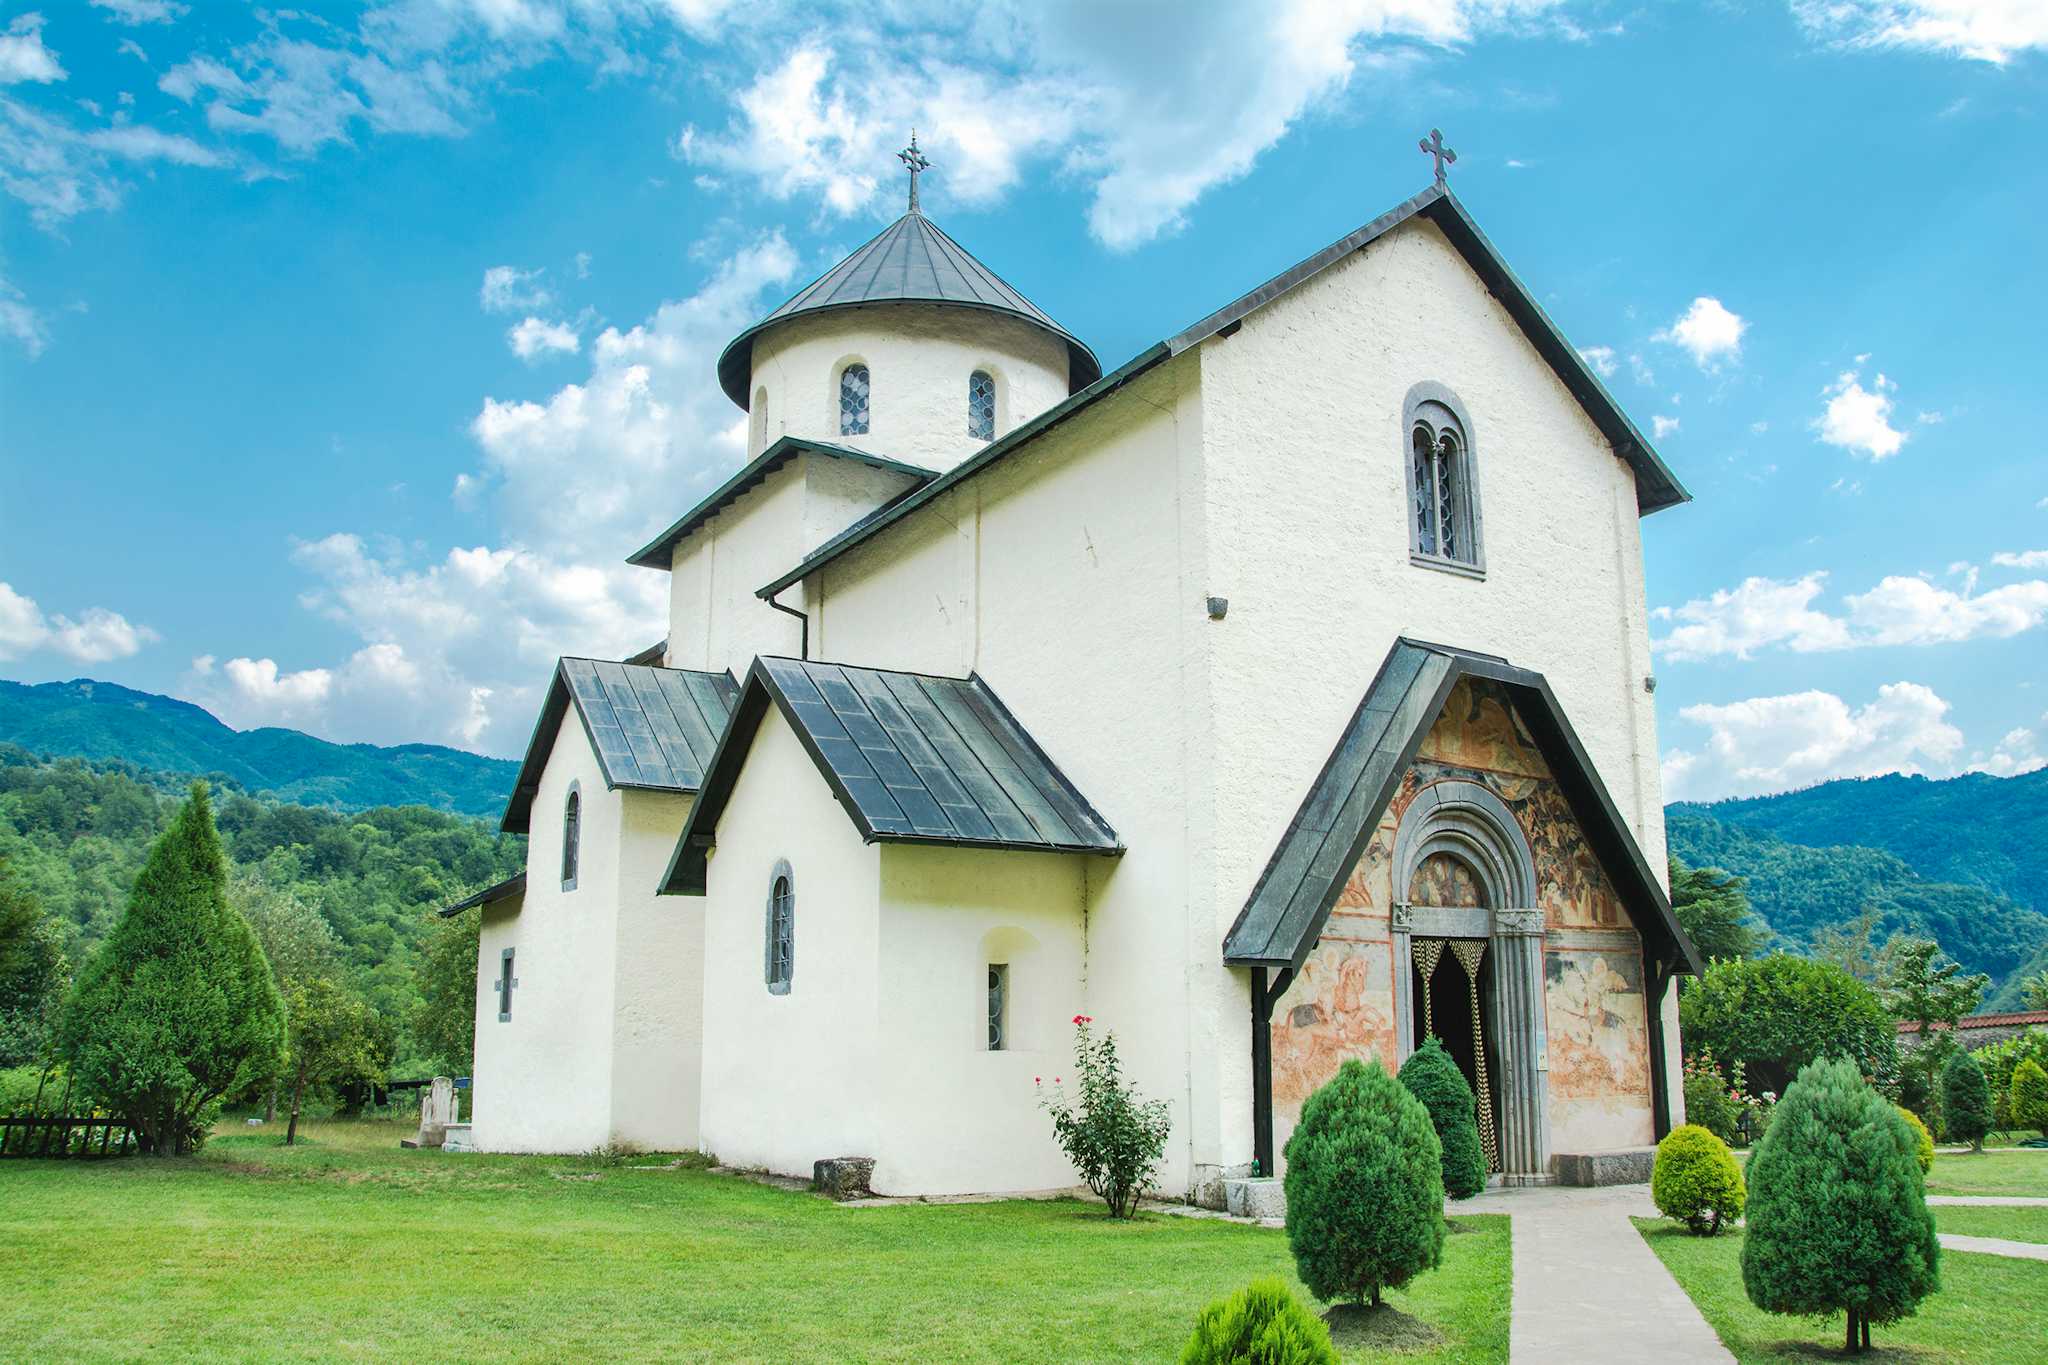 Moraca monastery